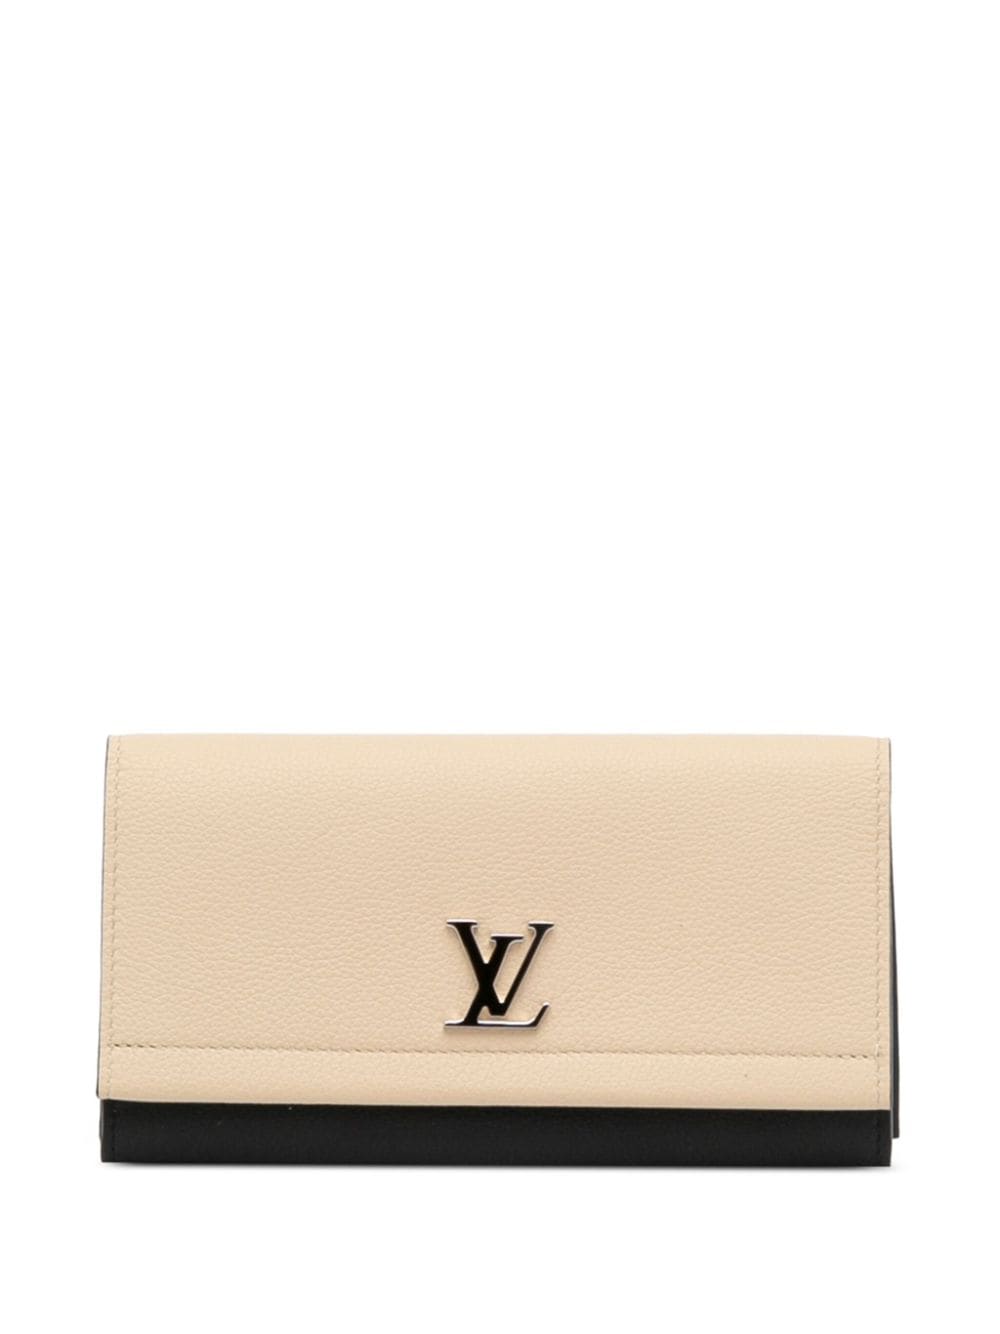 Louis Vuitton Lockme Beige Leather Wallet (Pre-Owned)